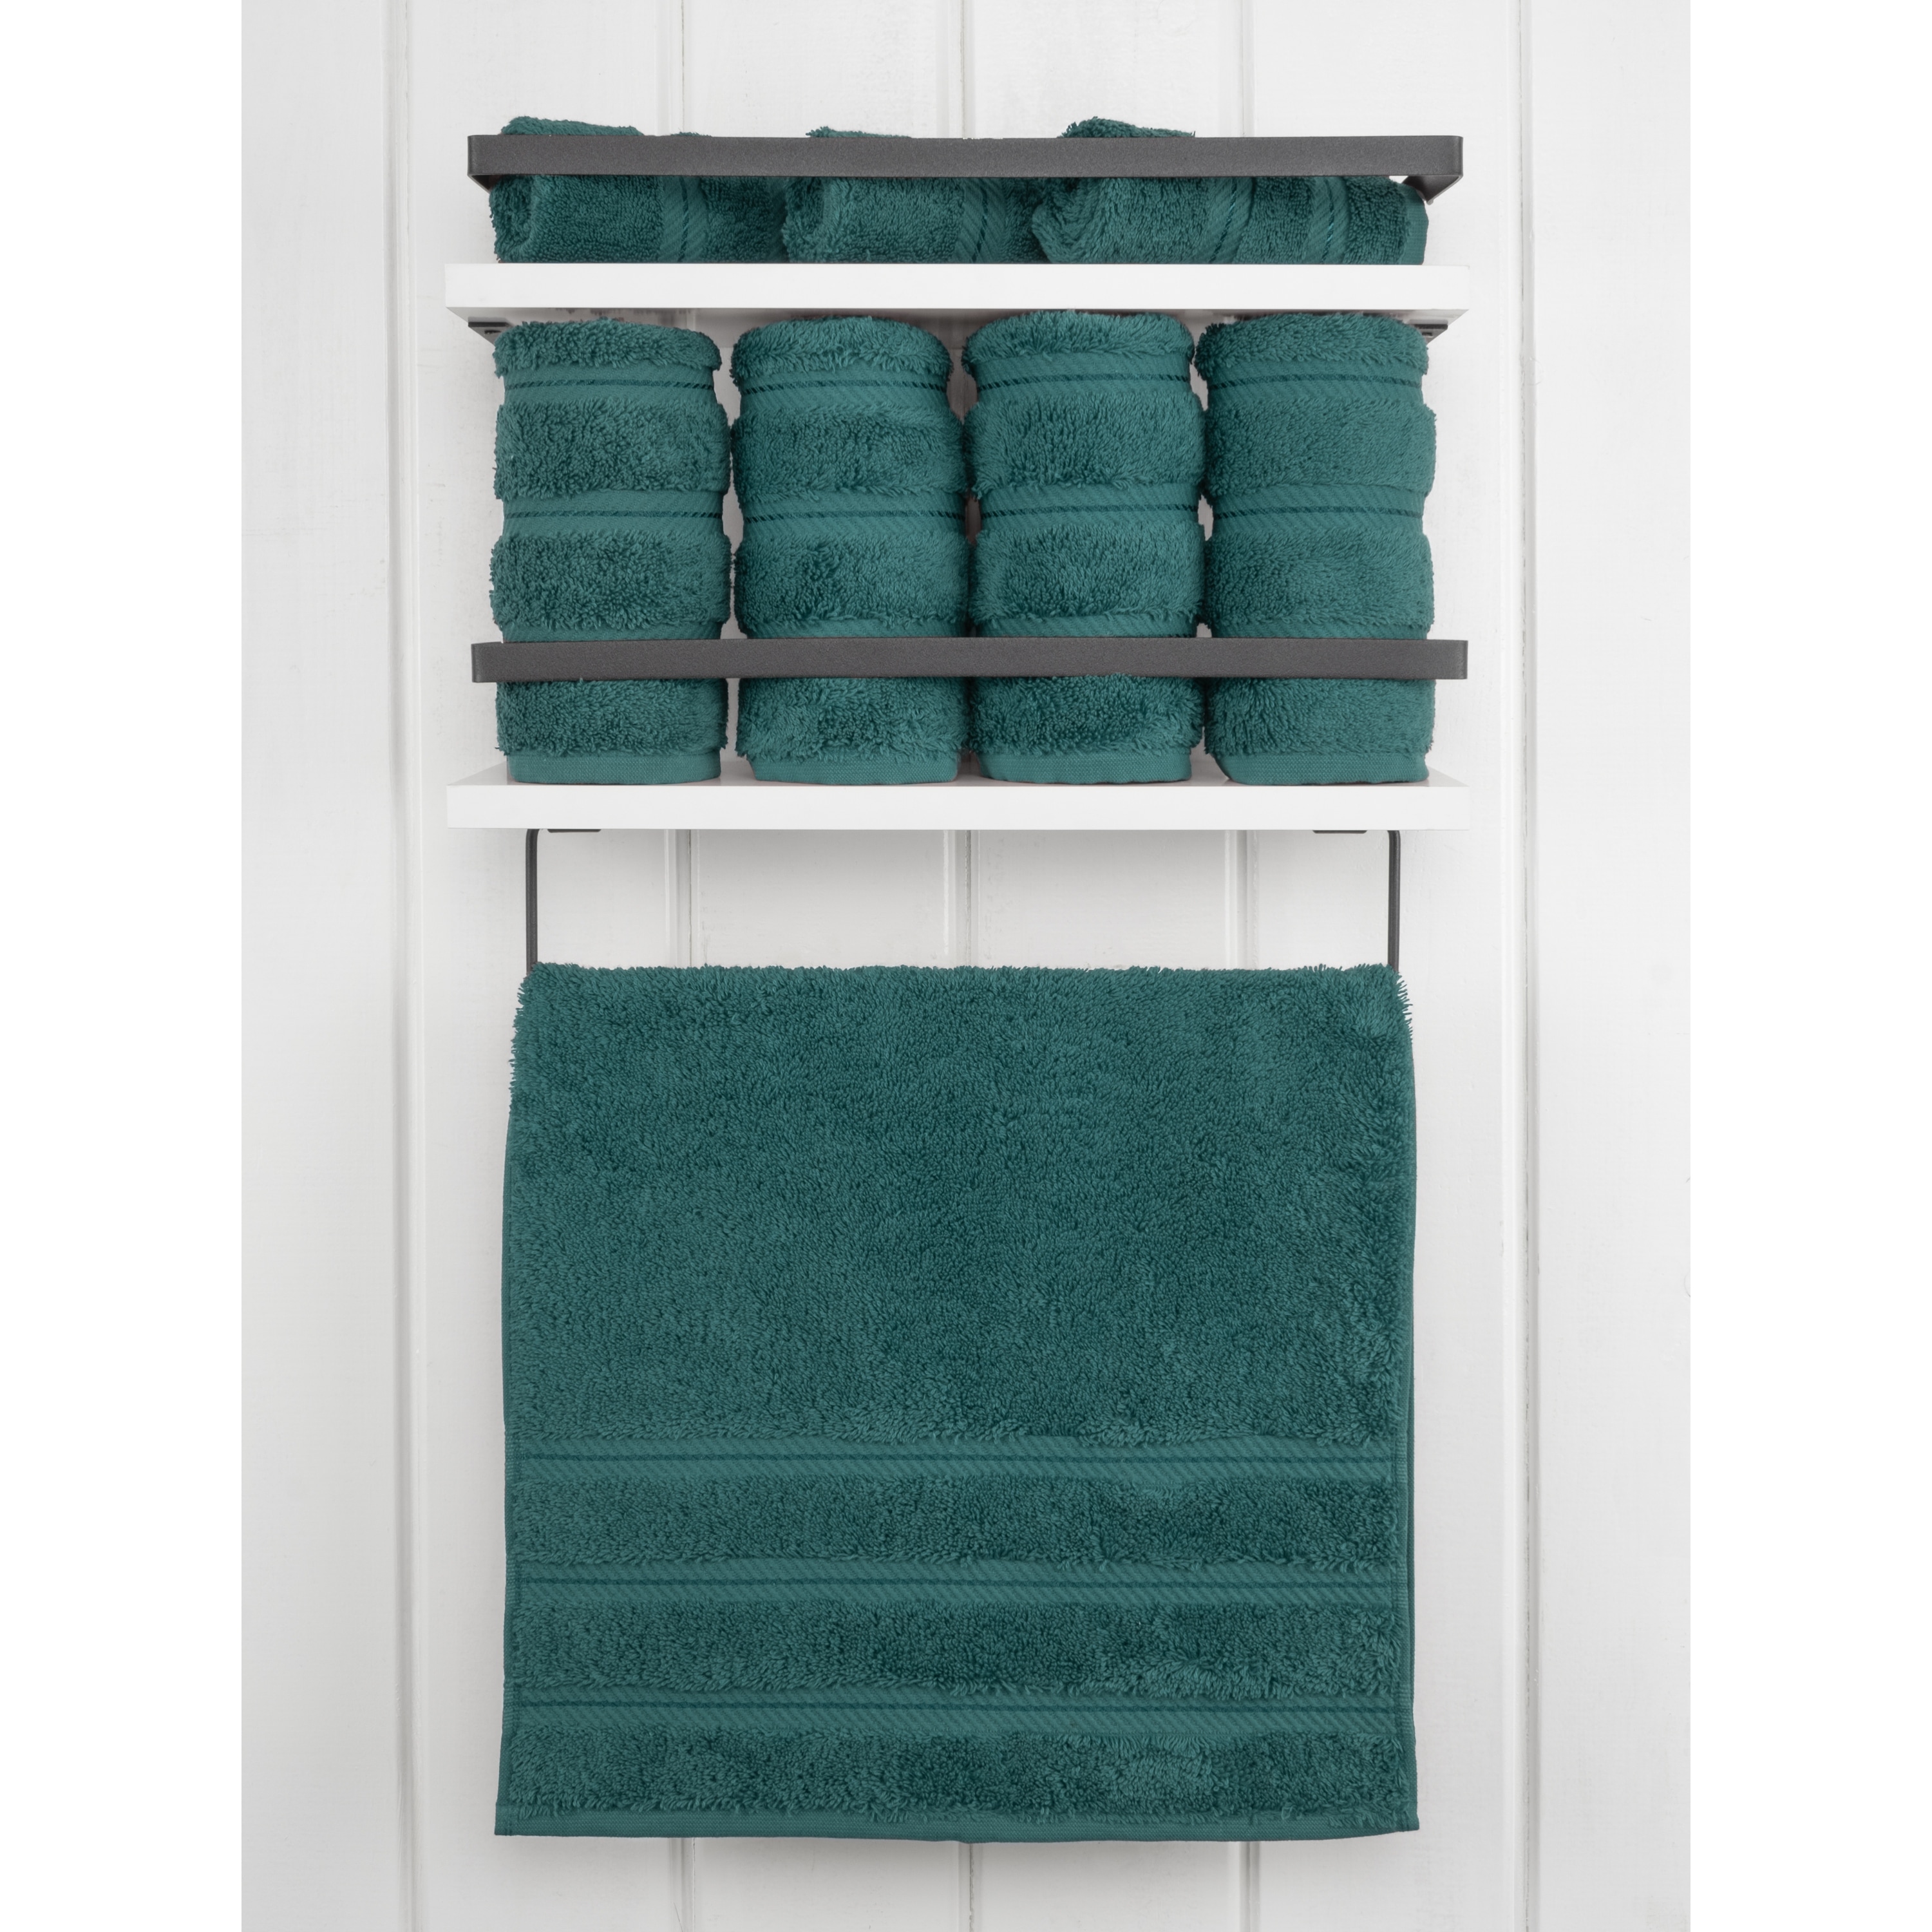 https://ak1.ostkcdn.com/images/products/is/images/direct/d274da15121422be4b255e818529a28aebc7053b/American-Soft-Linen-4-Piece-Turkish-Hand-Towel-Set.jpg